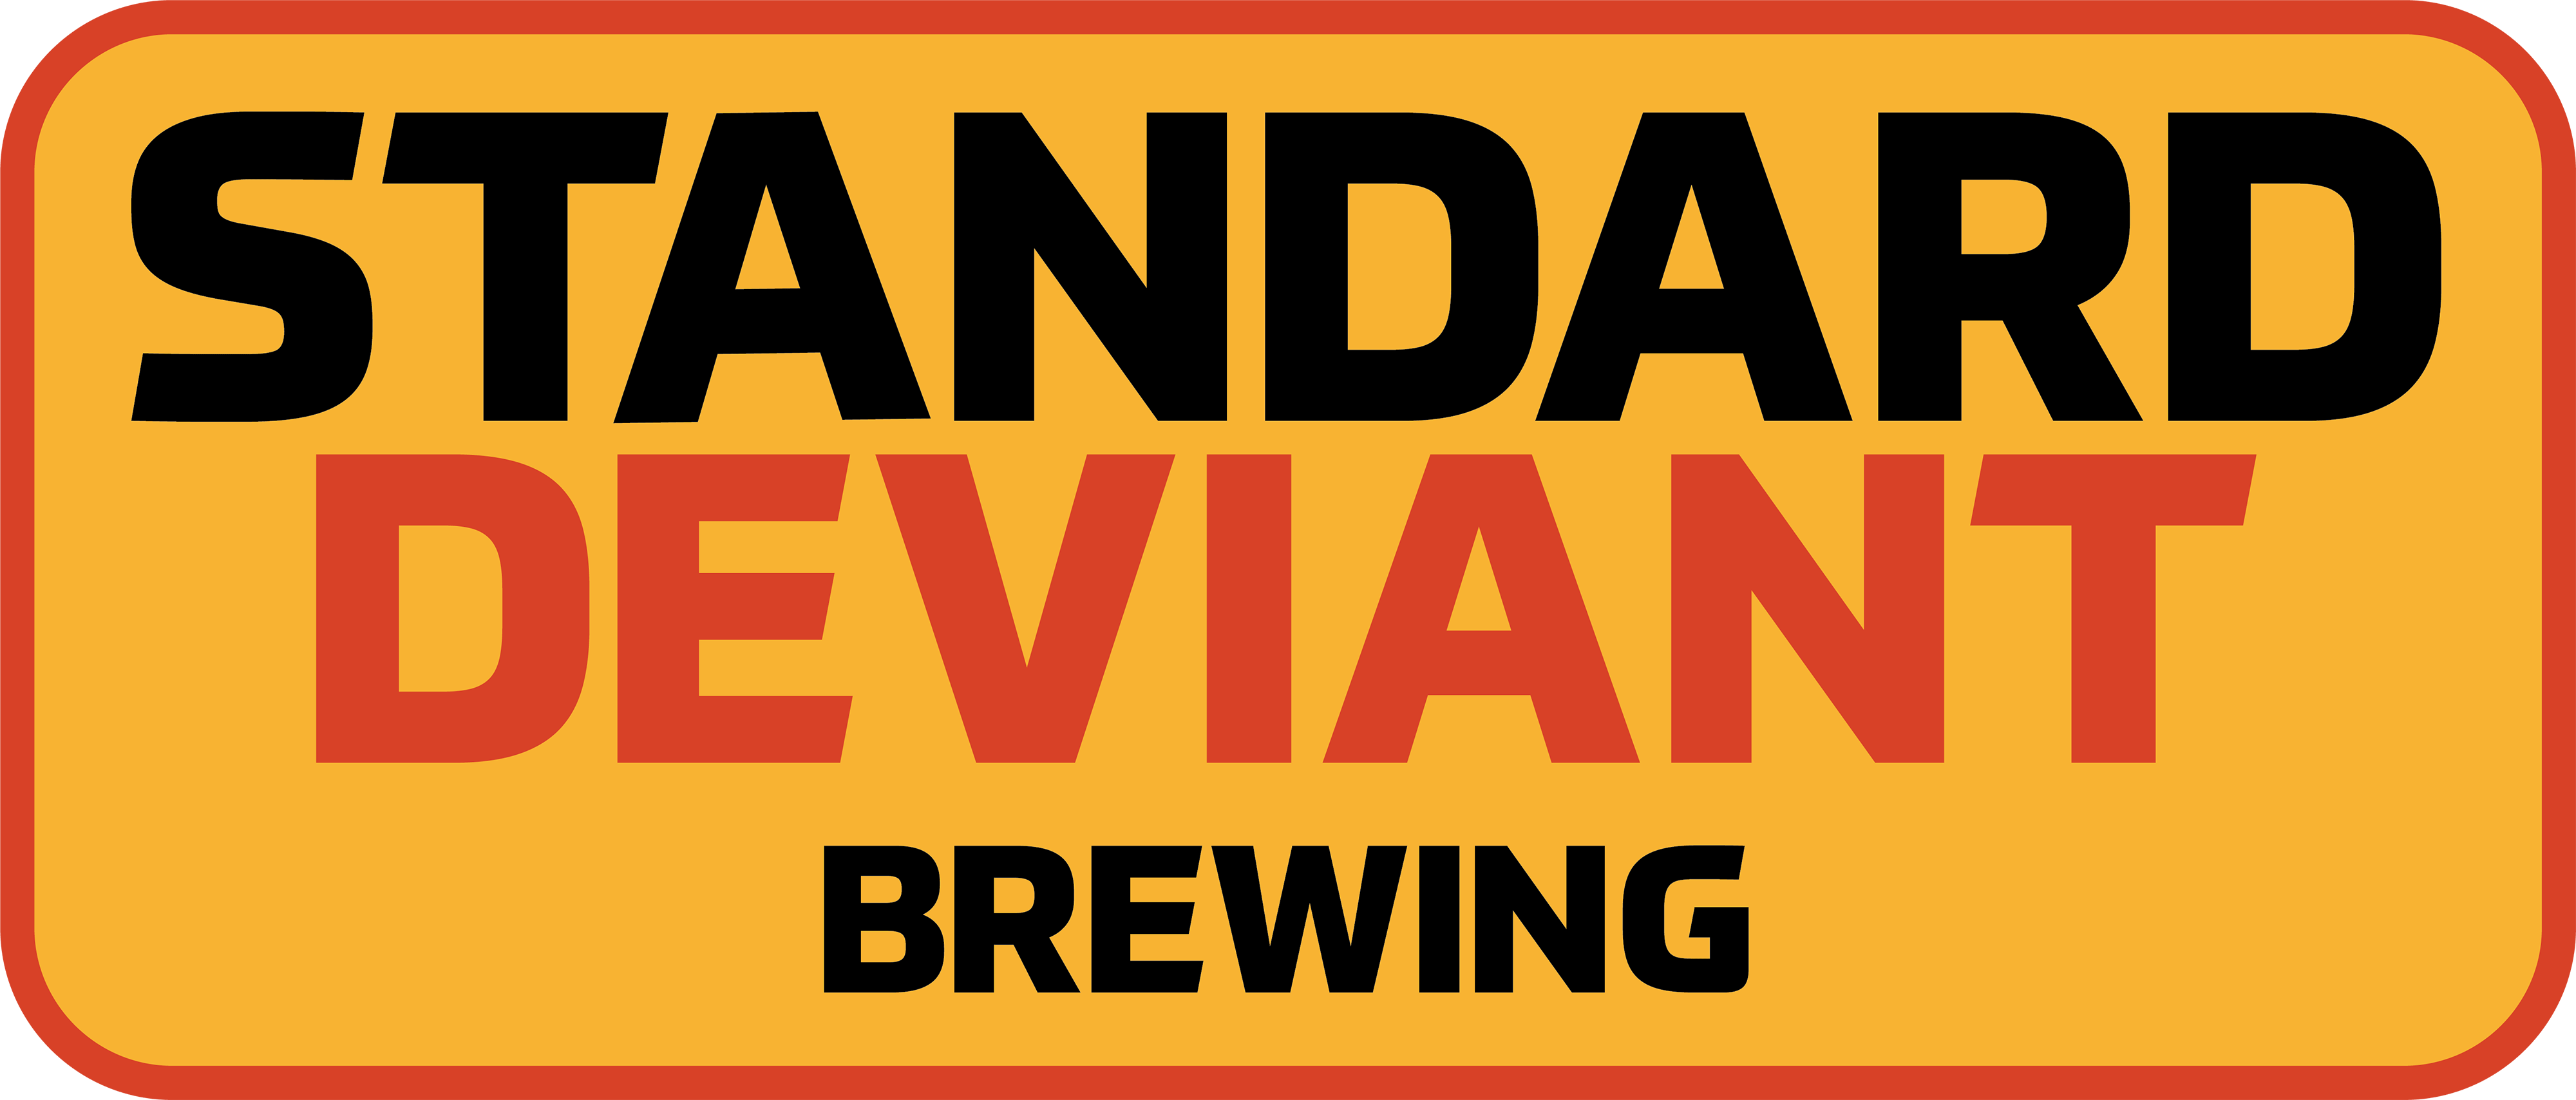 Deviant Logo - Standard Deviant Brewing – Standard Deviant Brewing